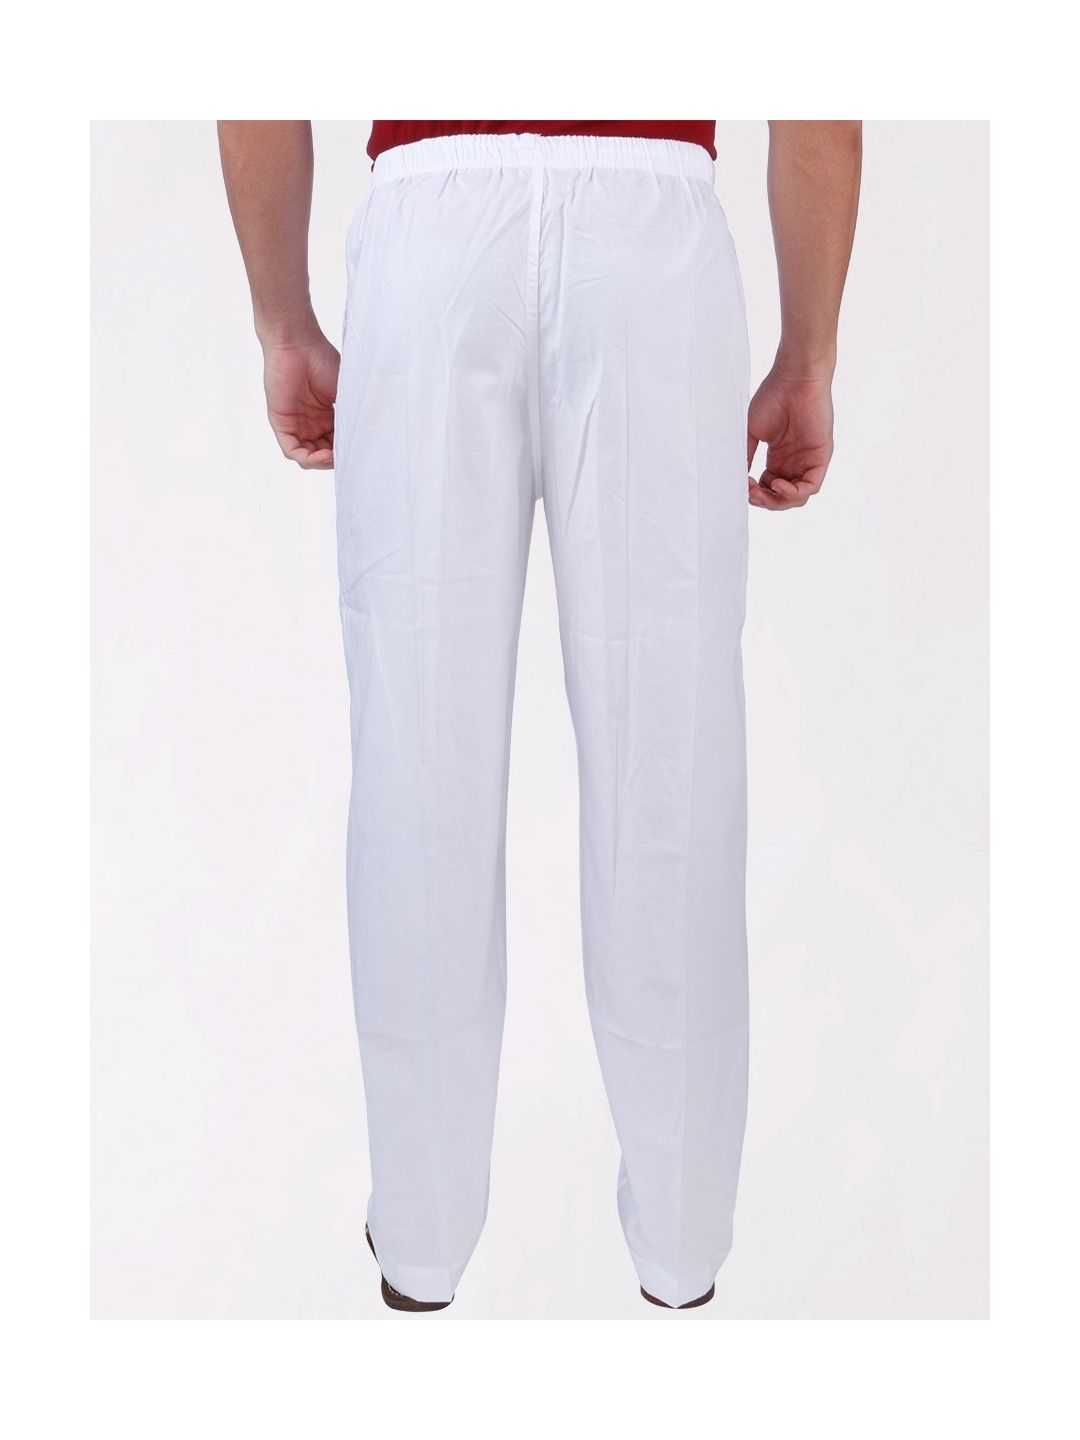 Buffalo Plaid - Men's Cotton Pajama Pants - Mulled Wine | Blush denim, Mens  cotton pajamas, Mens pajama pants